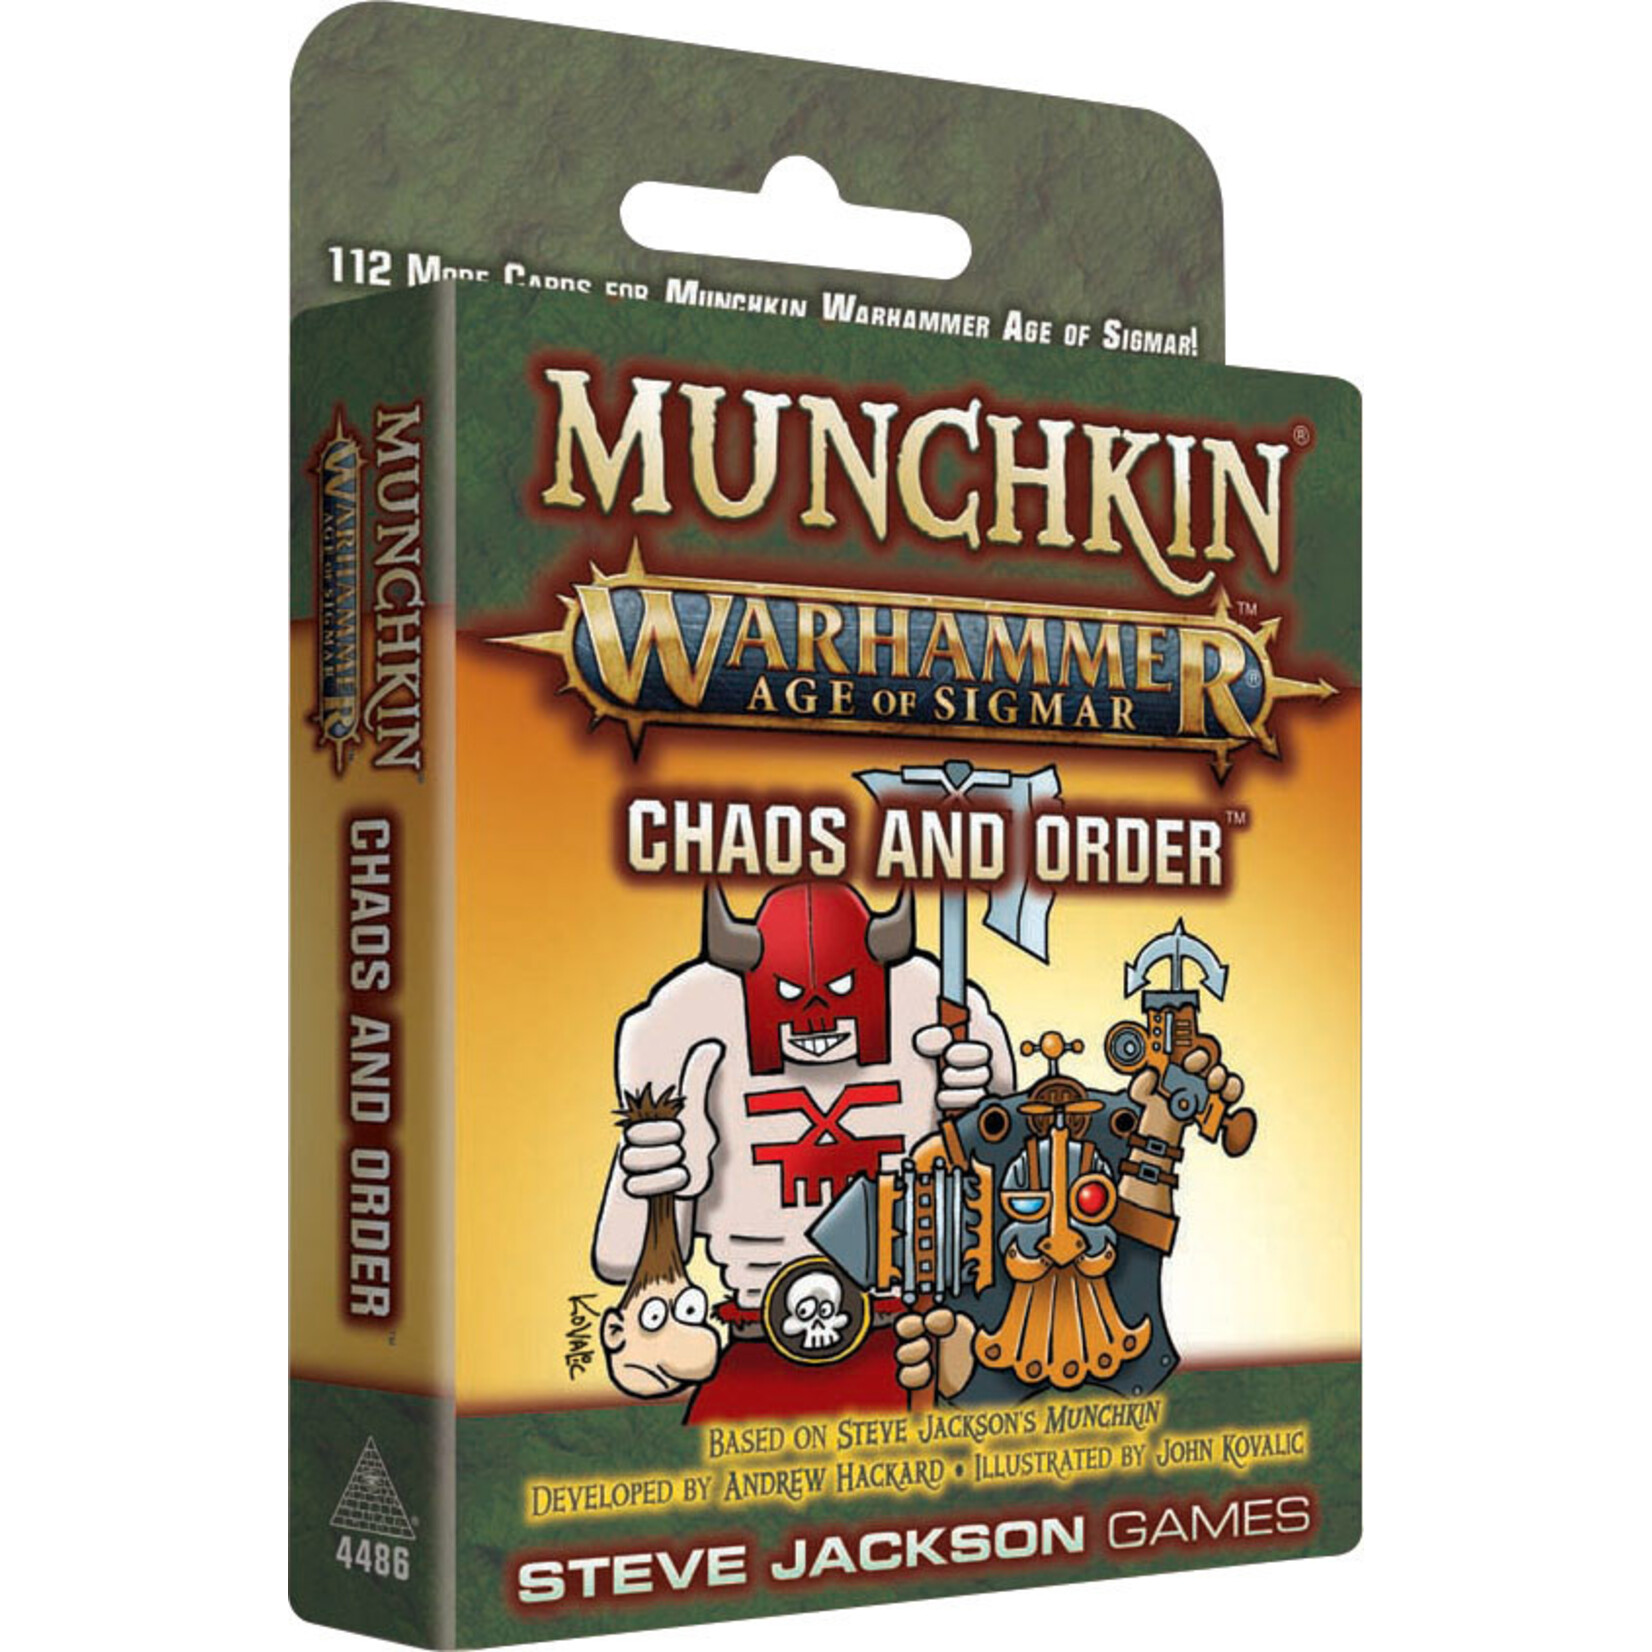 Steve Jackson Games Munchkin: Munchkin Warhammer Age of Sigmar - Chaos and Order Expansion